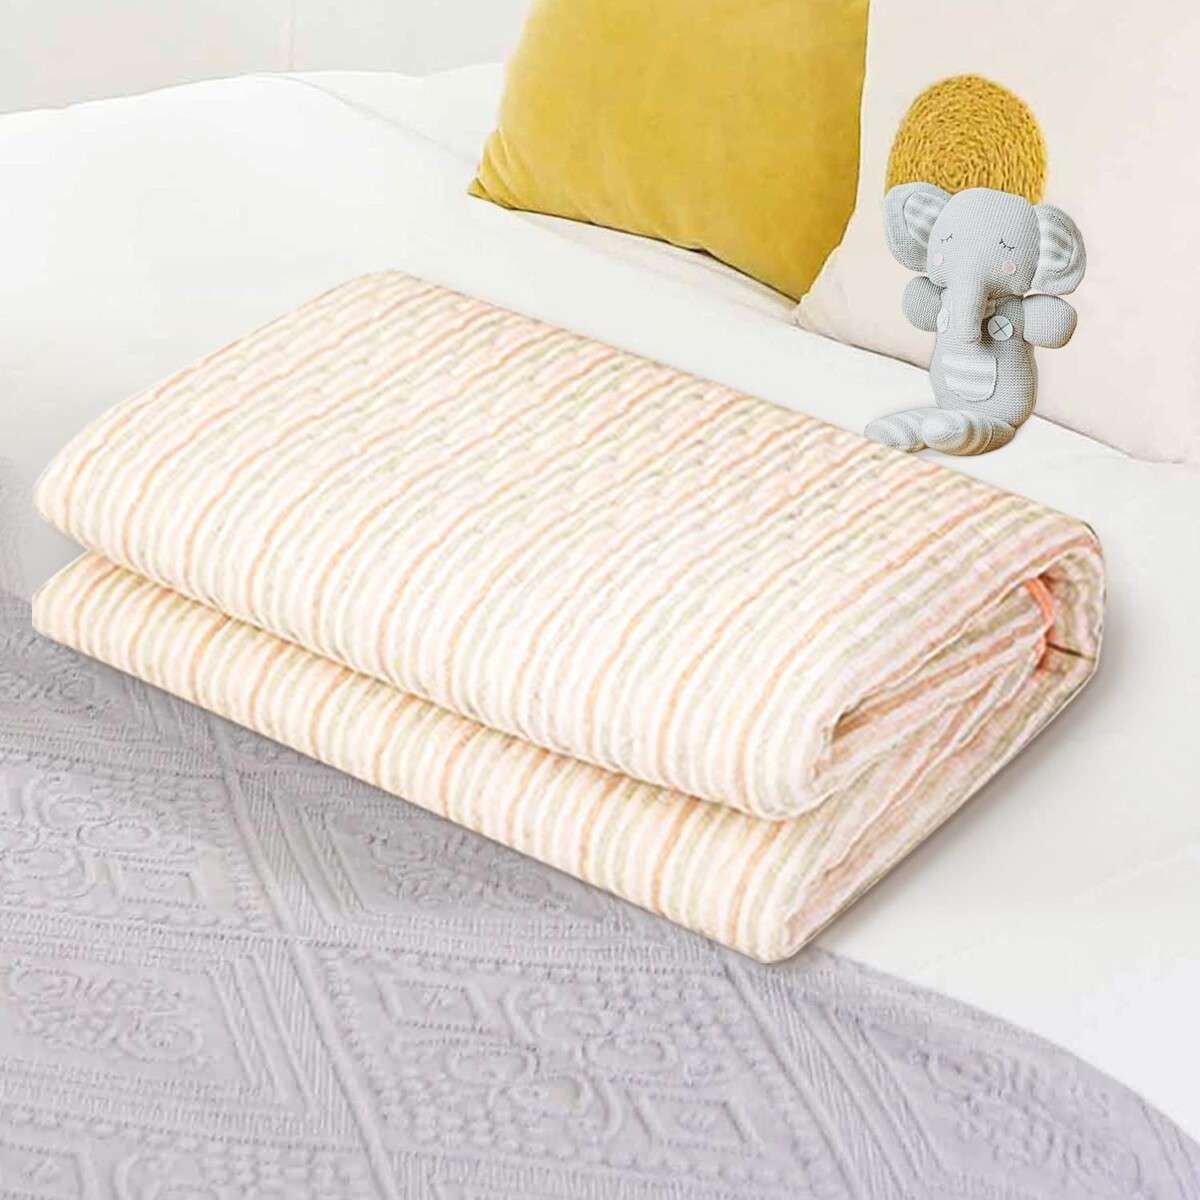 Alea's Deals Waterproof Bed Pad Washable - 60% off!  